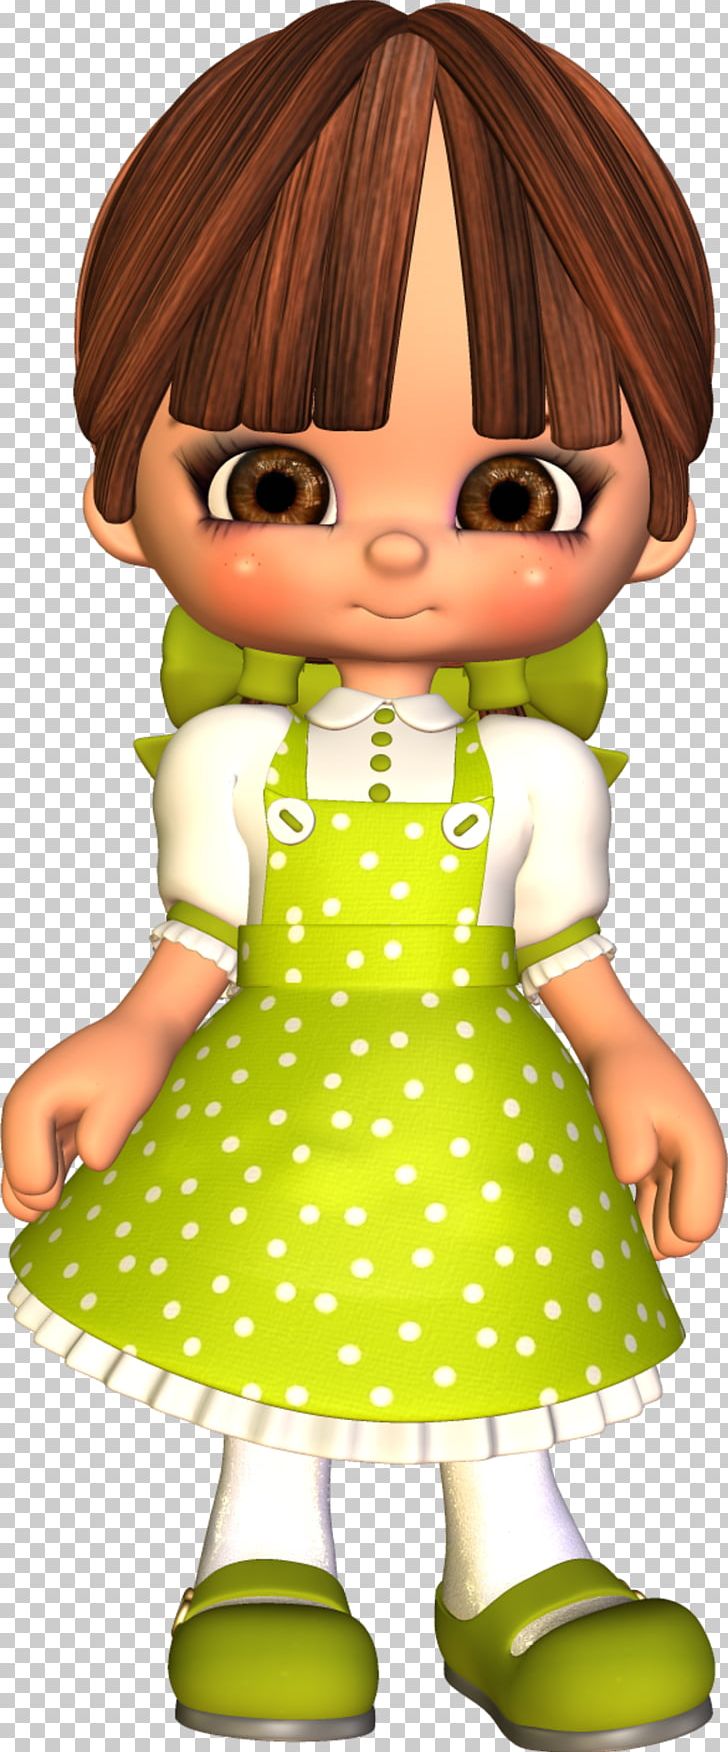 Green Toddler Character PNG, Clipart, Art, Black Hair, Brown Hair, Cartoon, Character Free PNG Download